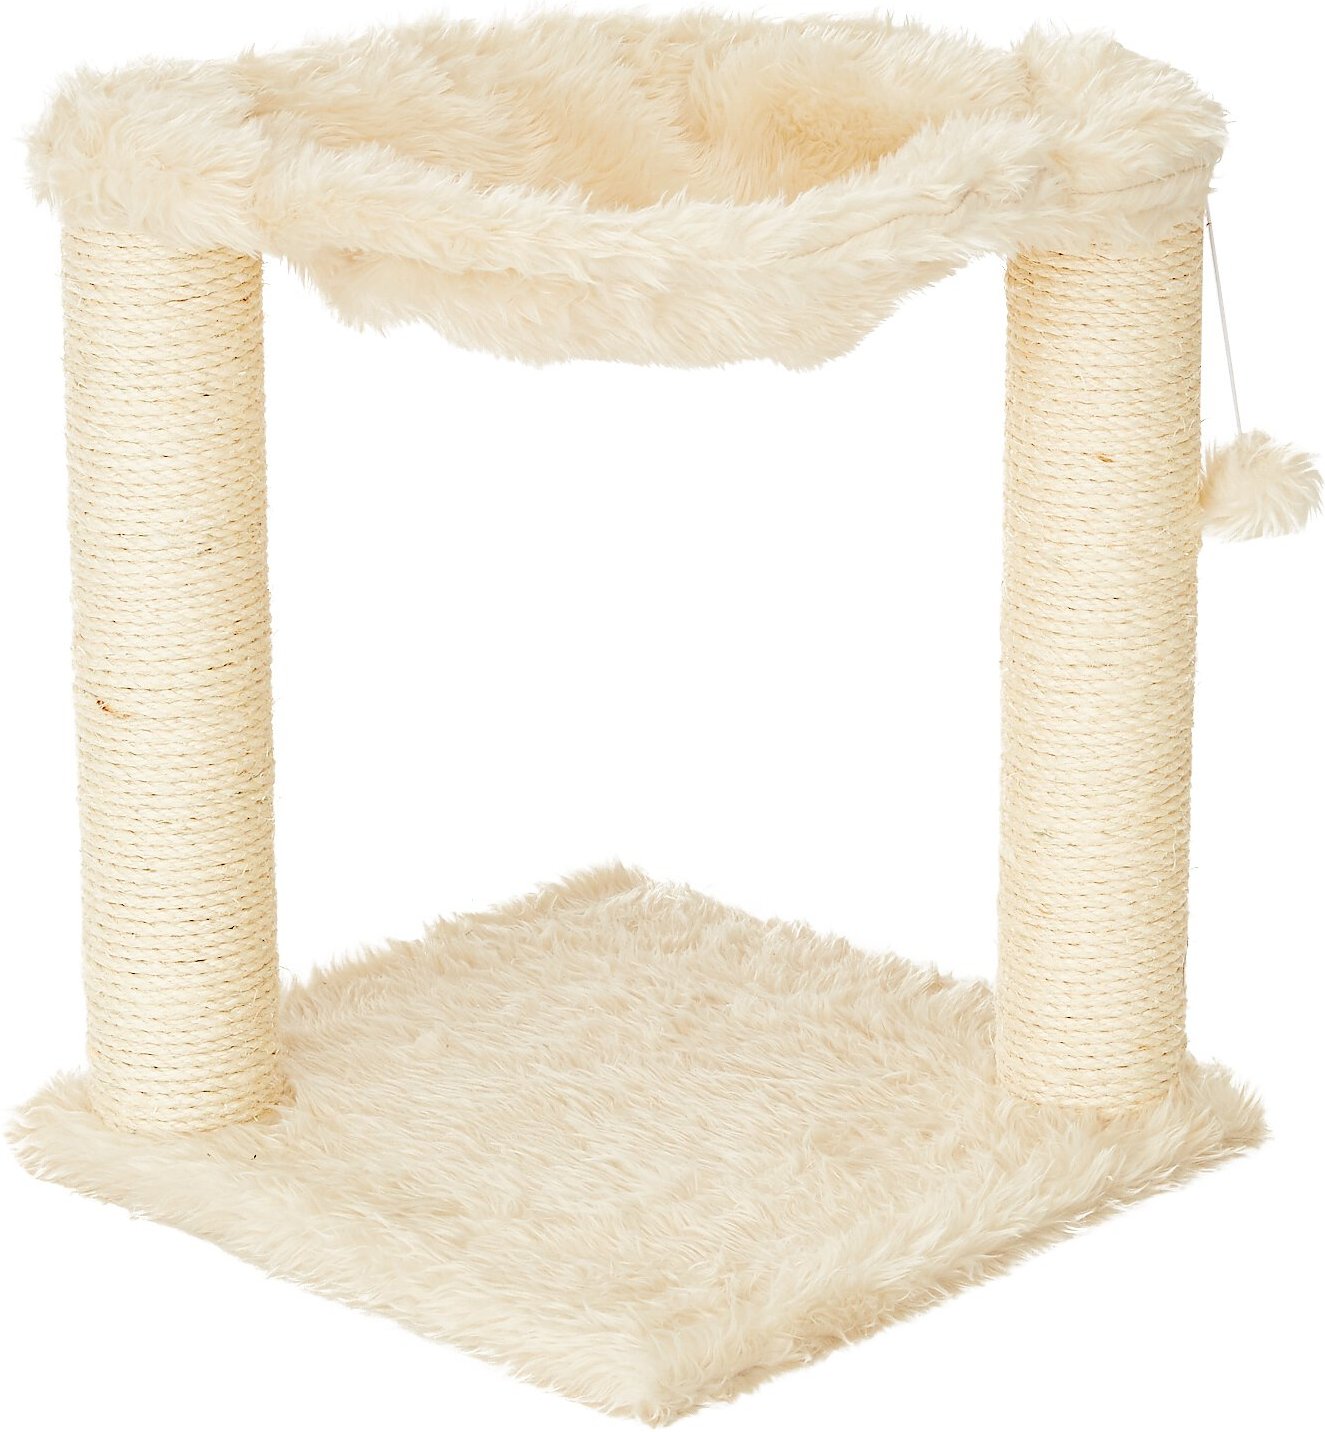 cat hammock for cat tree